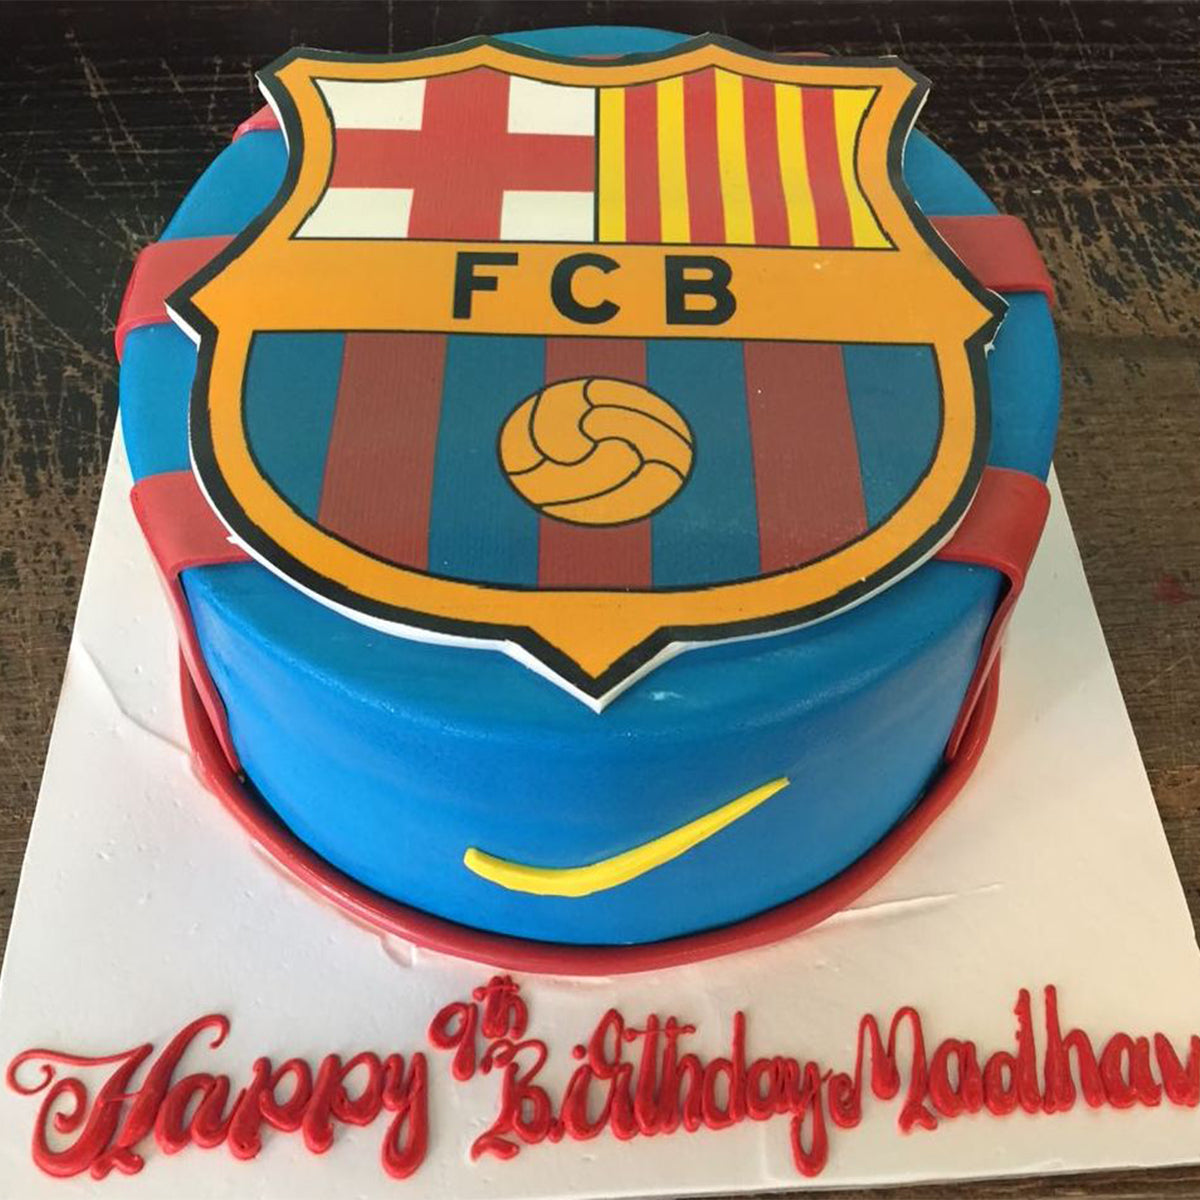 Barcelona Football Cake in Abu Dhabi